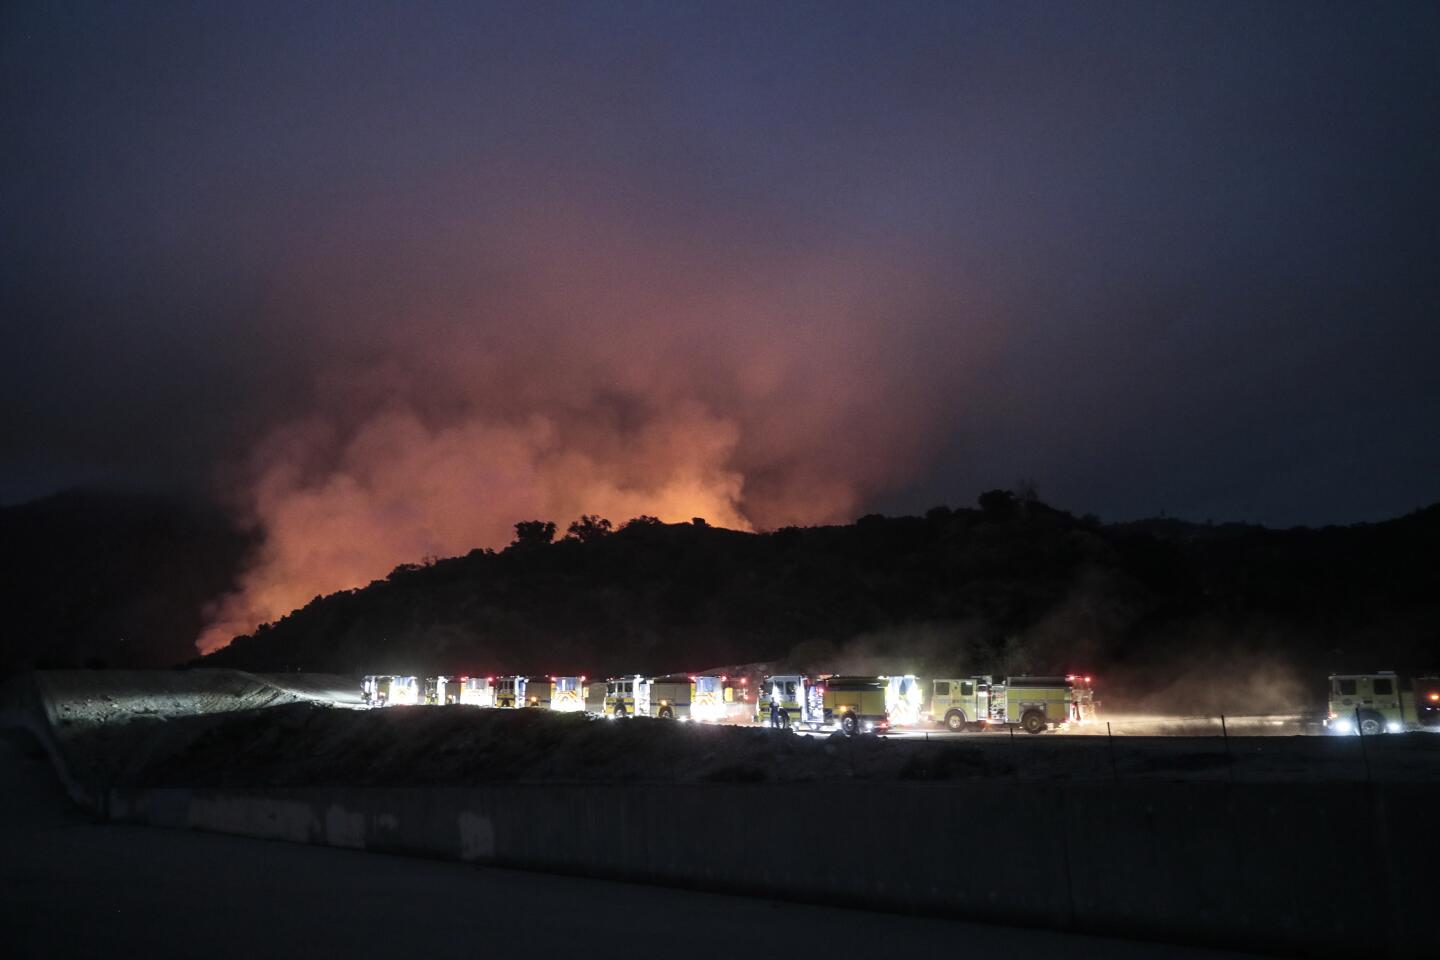 Fire engines head to the flaming Santa Anita Canyon as the Bobcat fire burns near Arcadia